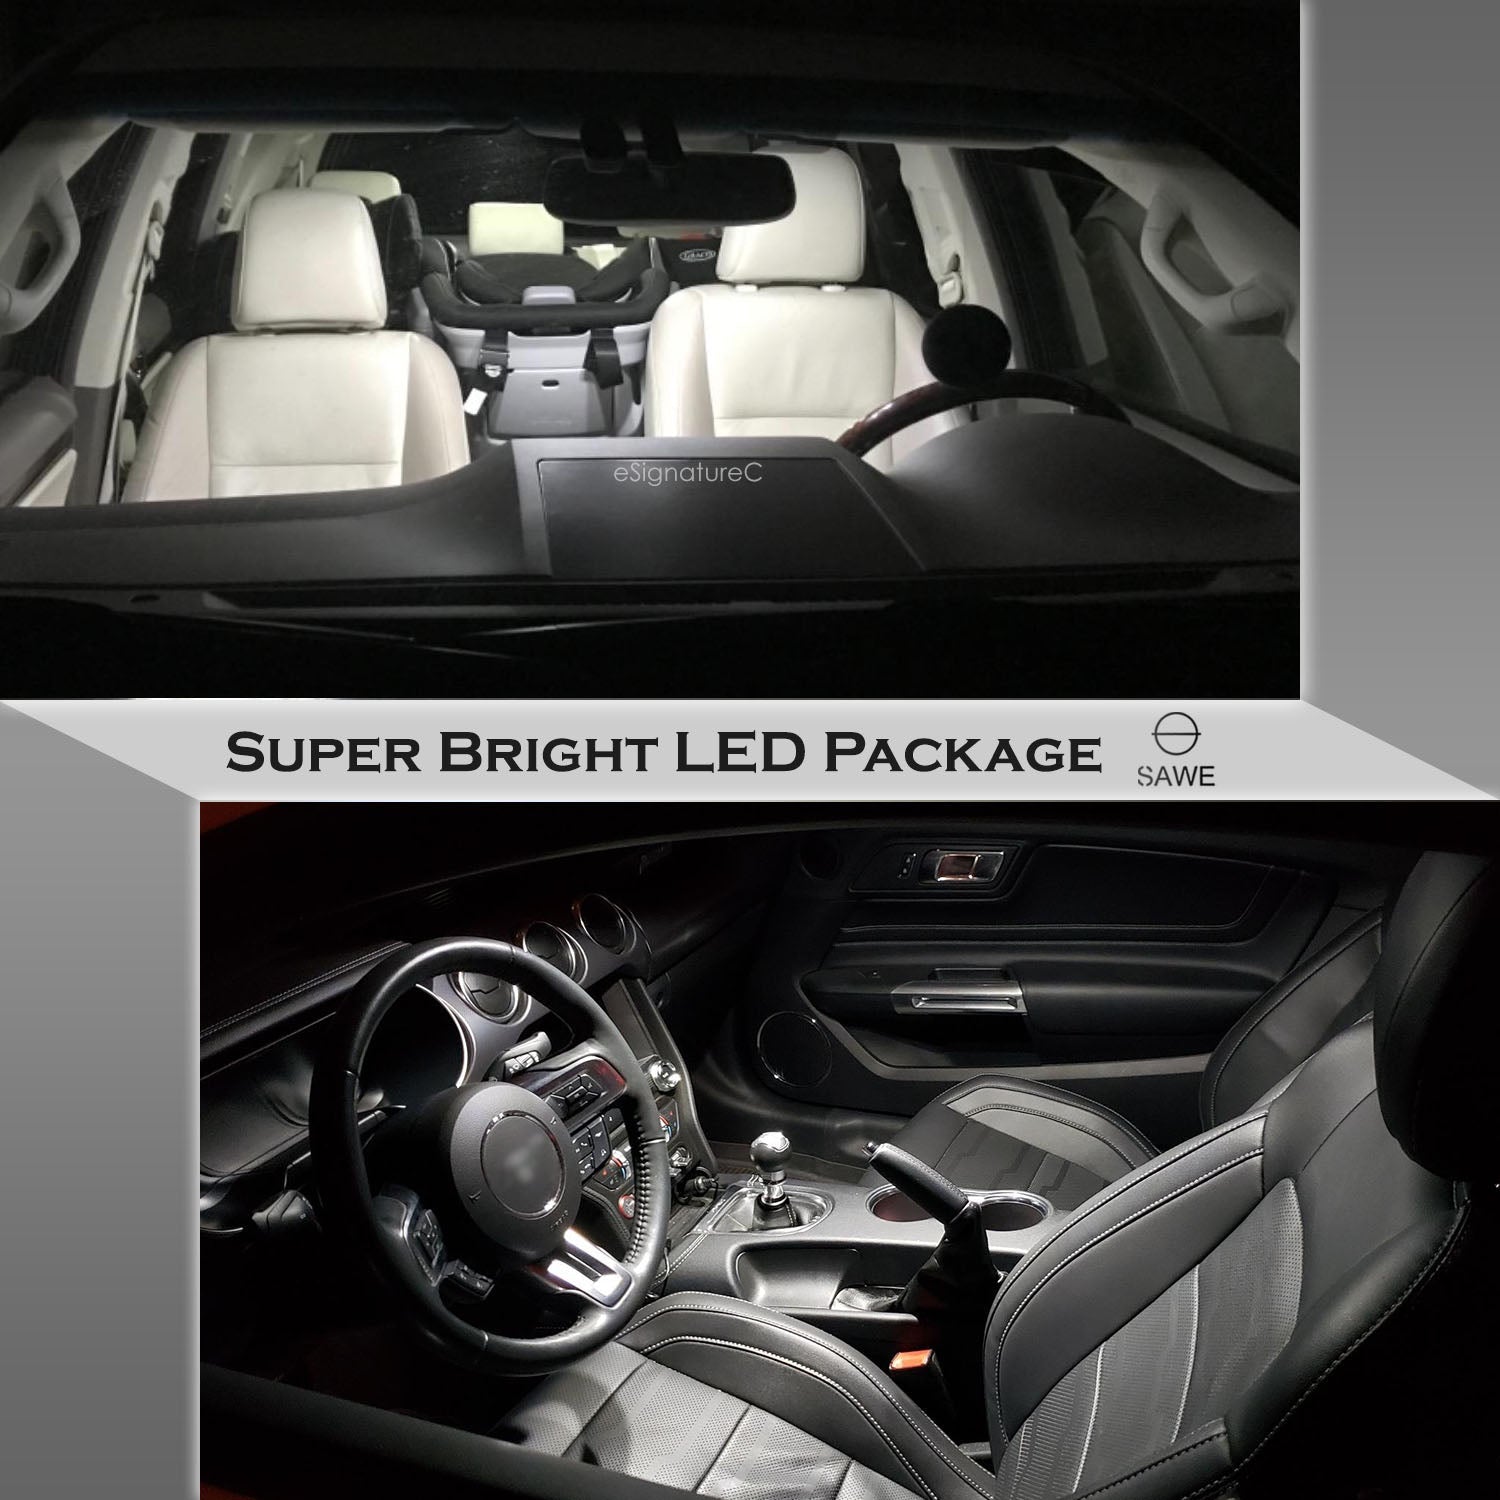 For Kia Sedona Interior LED Lights - Dome & Map Light Bulbs Package Kit for 2007 - 2012 - White